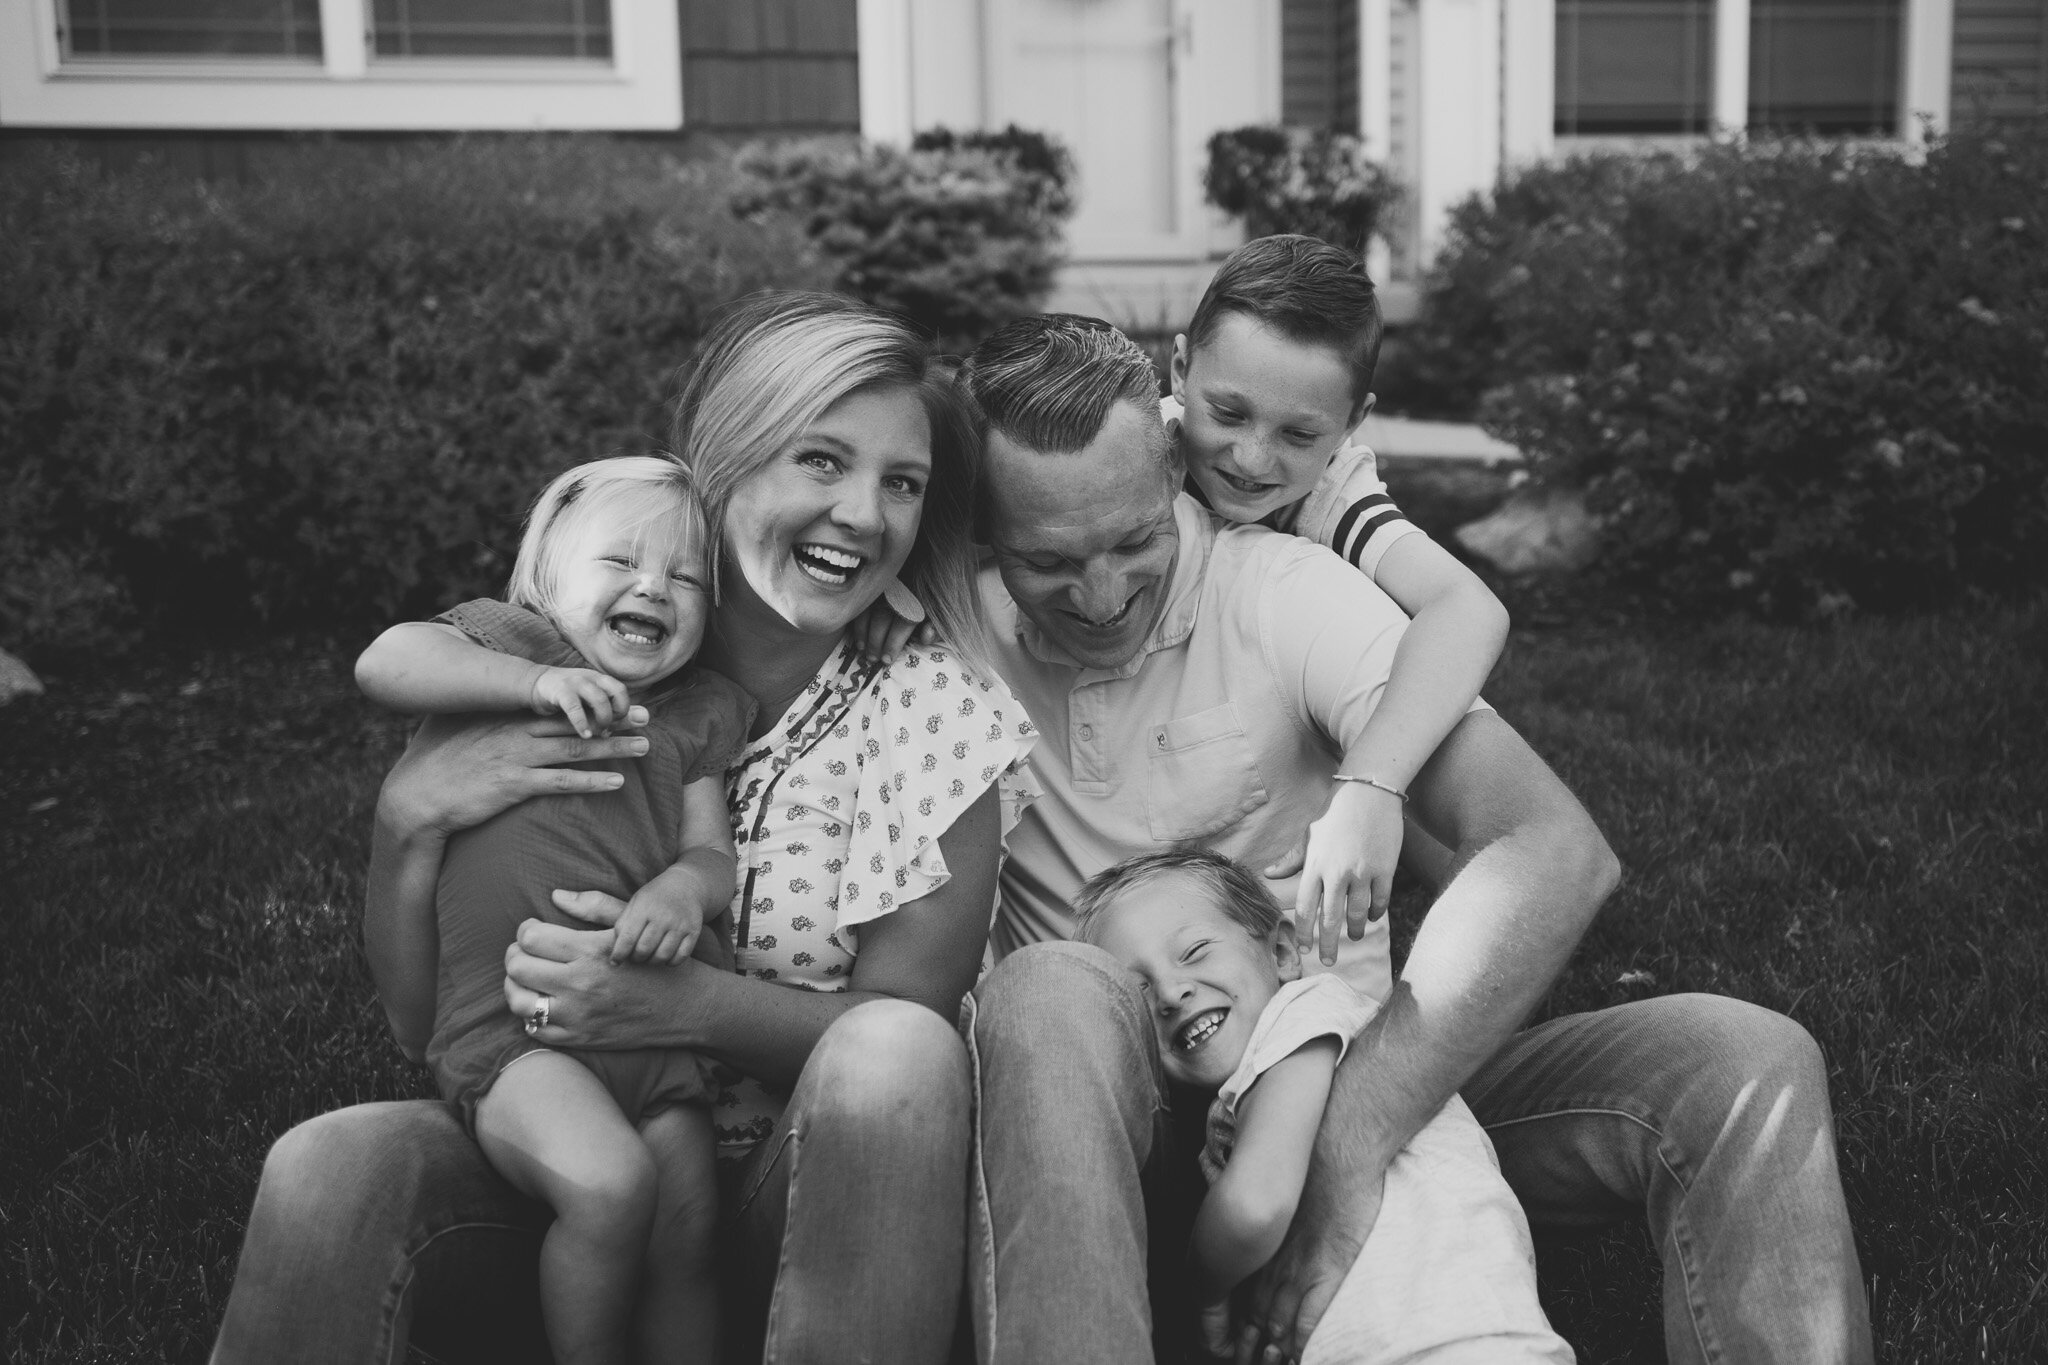 Clabuesch Family - Grand Rapids Family Photographer - Grand Rapids Lifestyle Photographer - Jessica Darling - J Darling Photo017.jpg